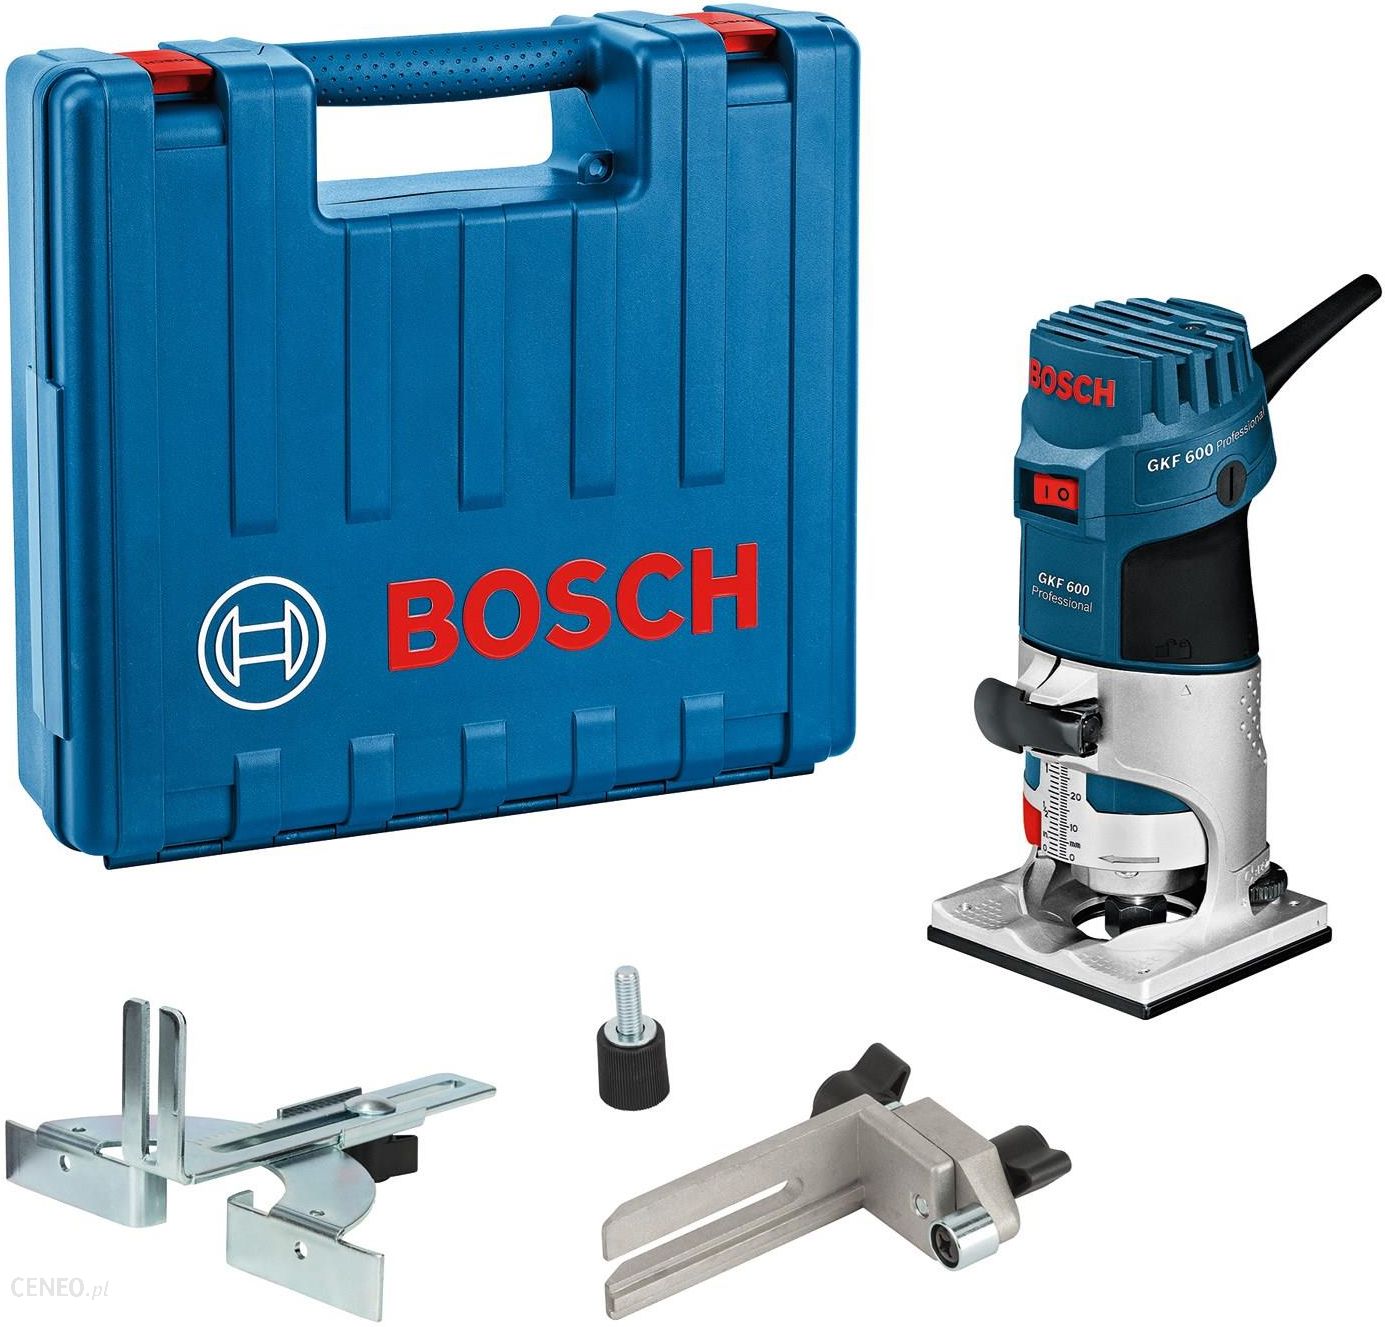 Bosch GKF 600 060160A100